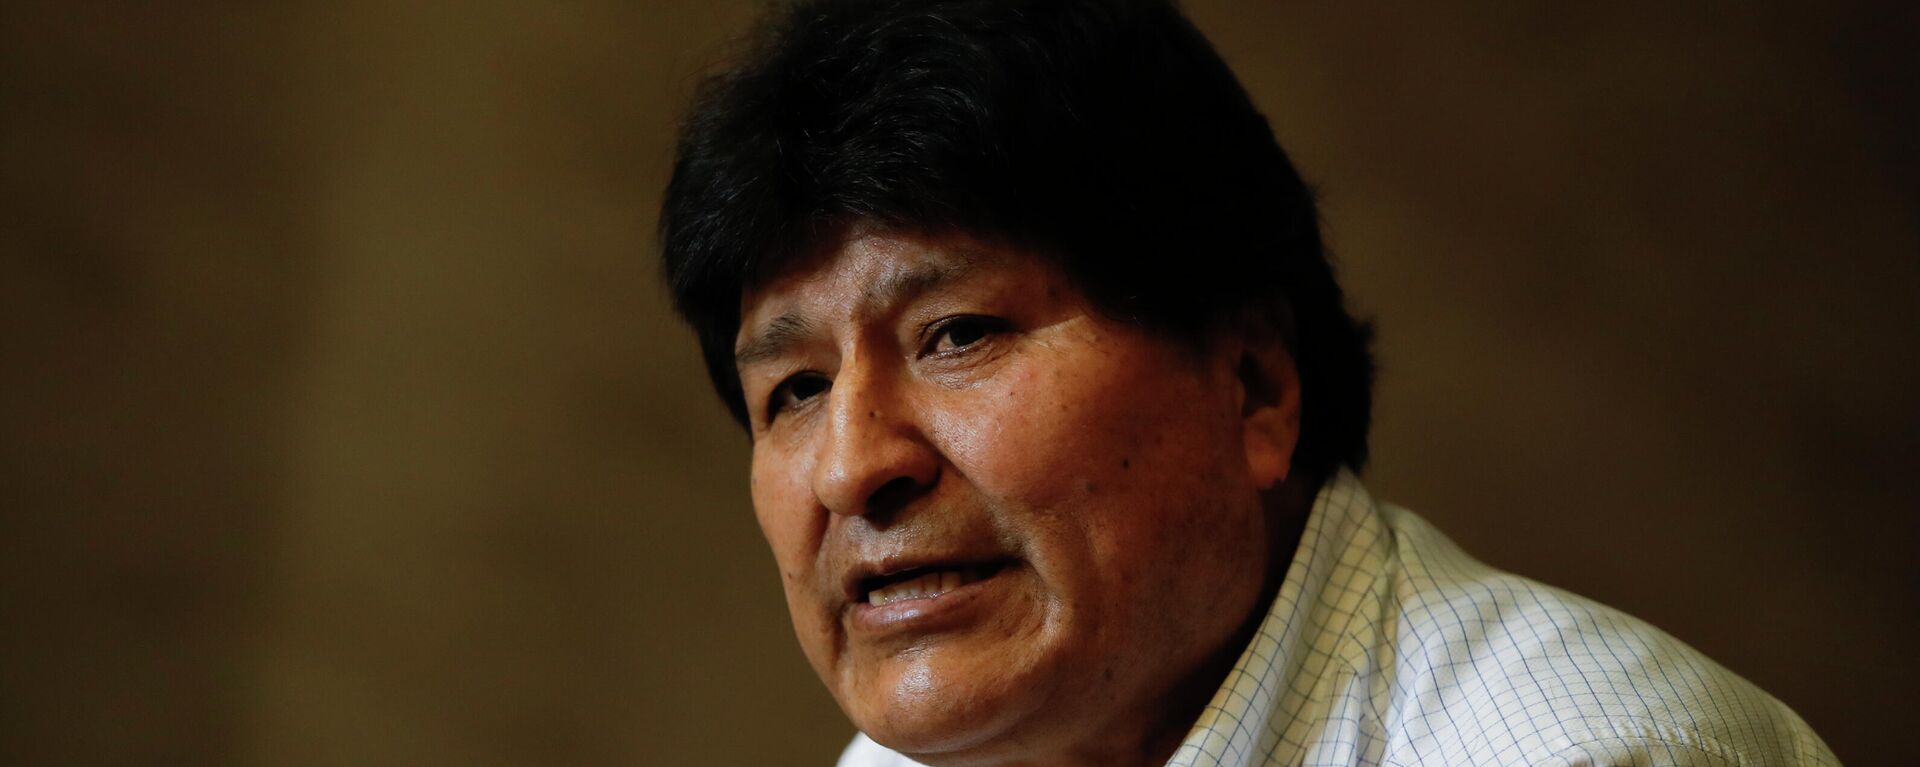 El expresidente socialista boliviano Evo Morales (2006-2019) - Sputnik Mundo, 1920, 08.04.2022